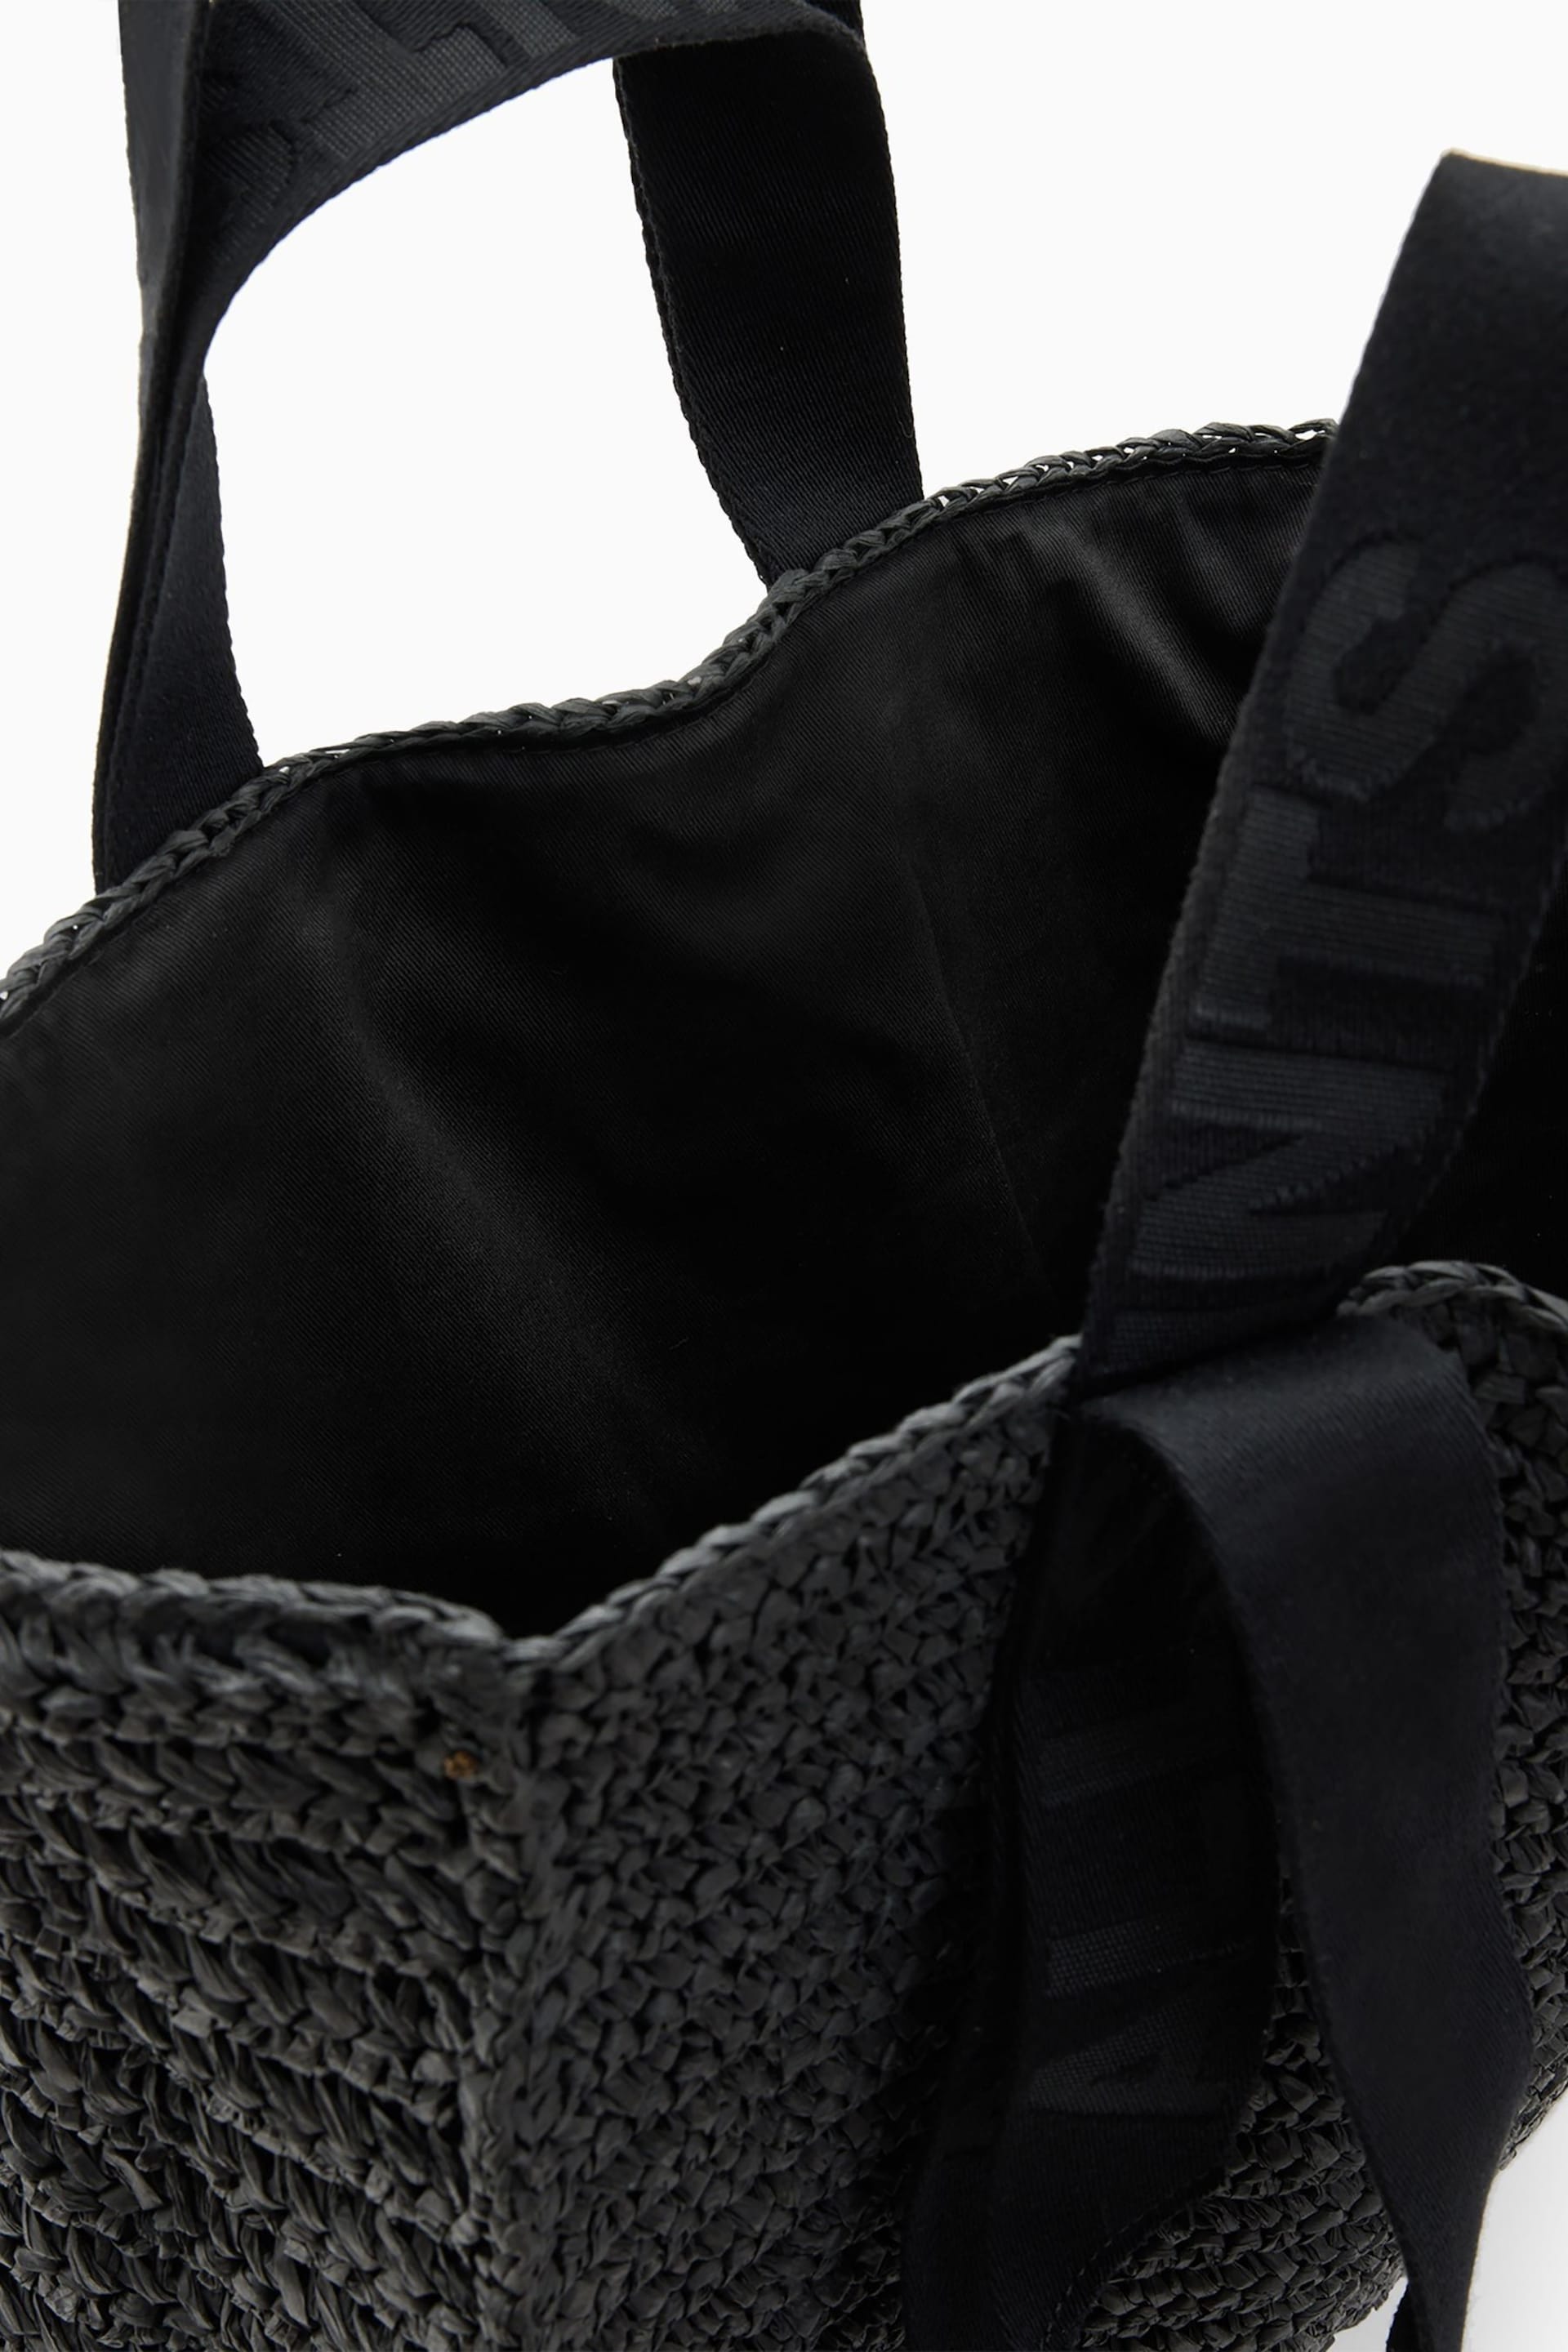 AllSaints Black Lullah N/S Tote Bag - Image 6 of 7